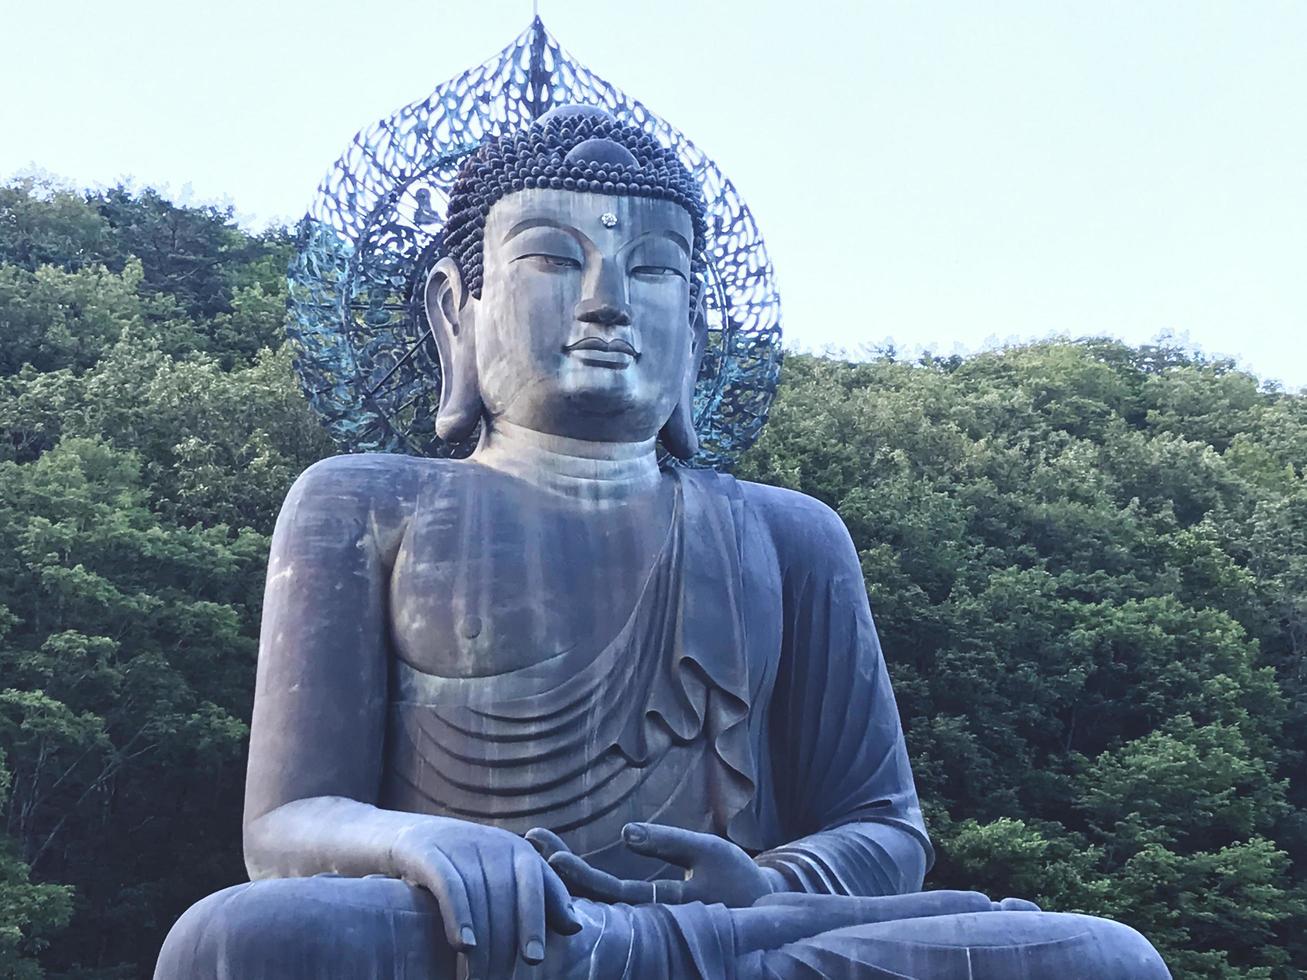 groot boeddhabeeld in soraksan nationaal park, zuid-korea foto